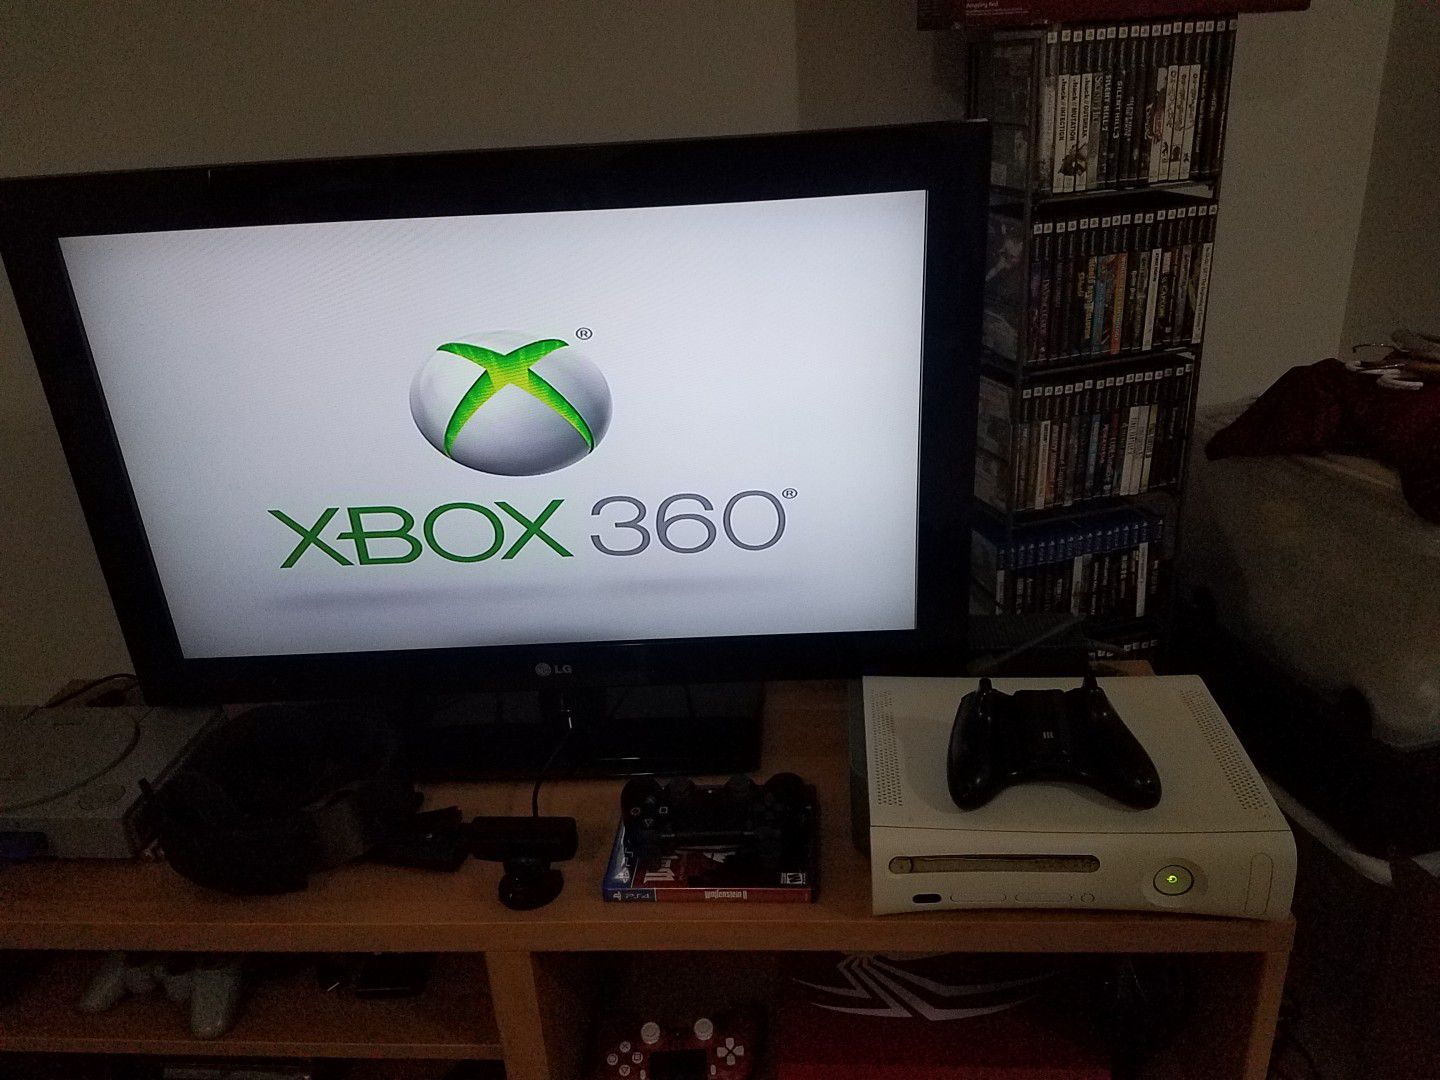 Xbox 360 Video game console.